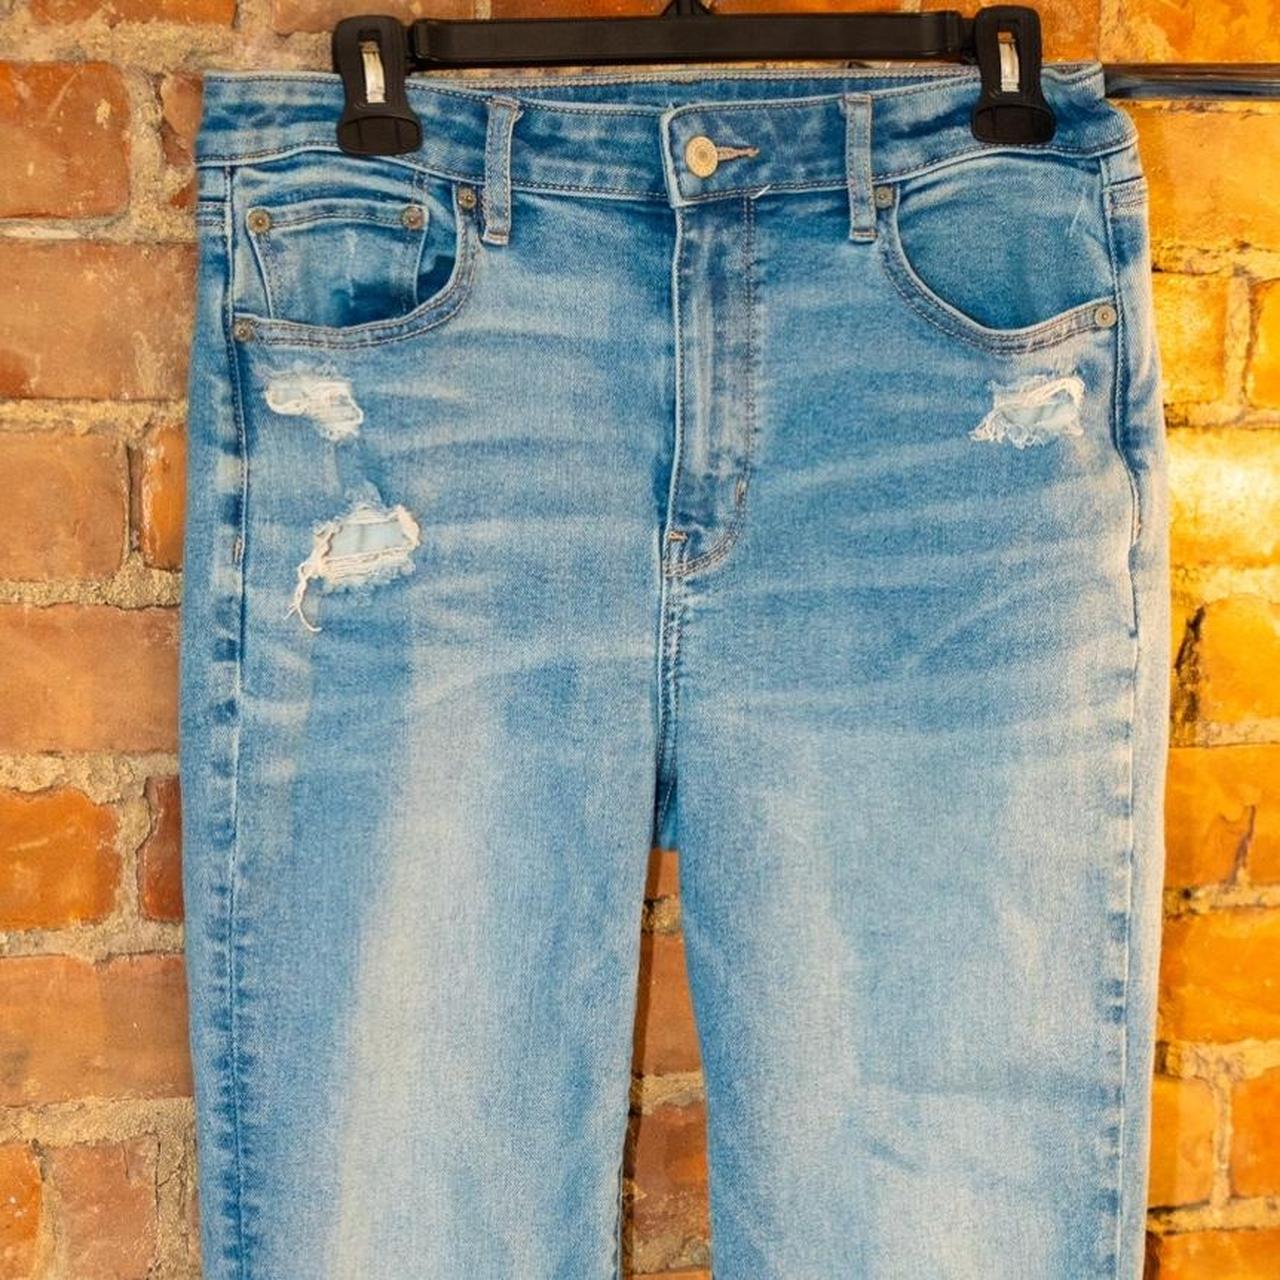 American Eagle Light Wash Distressed Jeans - Depop